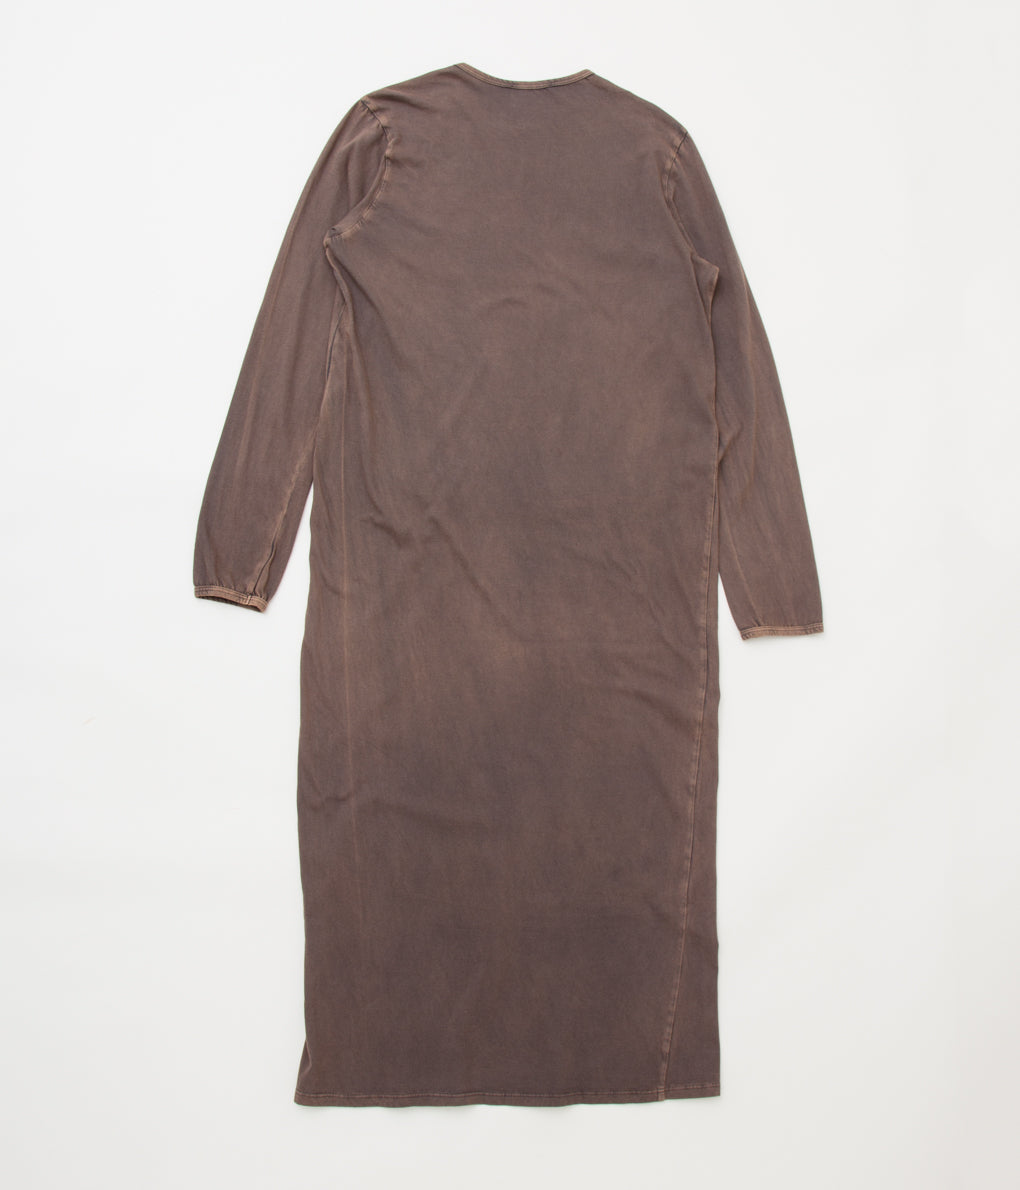 GABRIELA COLL GARMENTS "NO.154 LONG SLEEVE T-SHIRT DRESS"(BLACK SALT WASH)